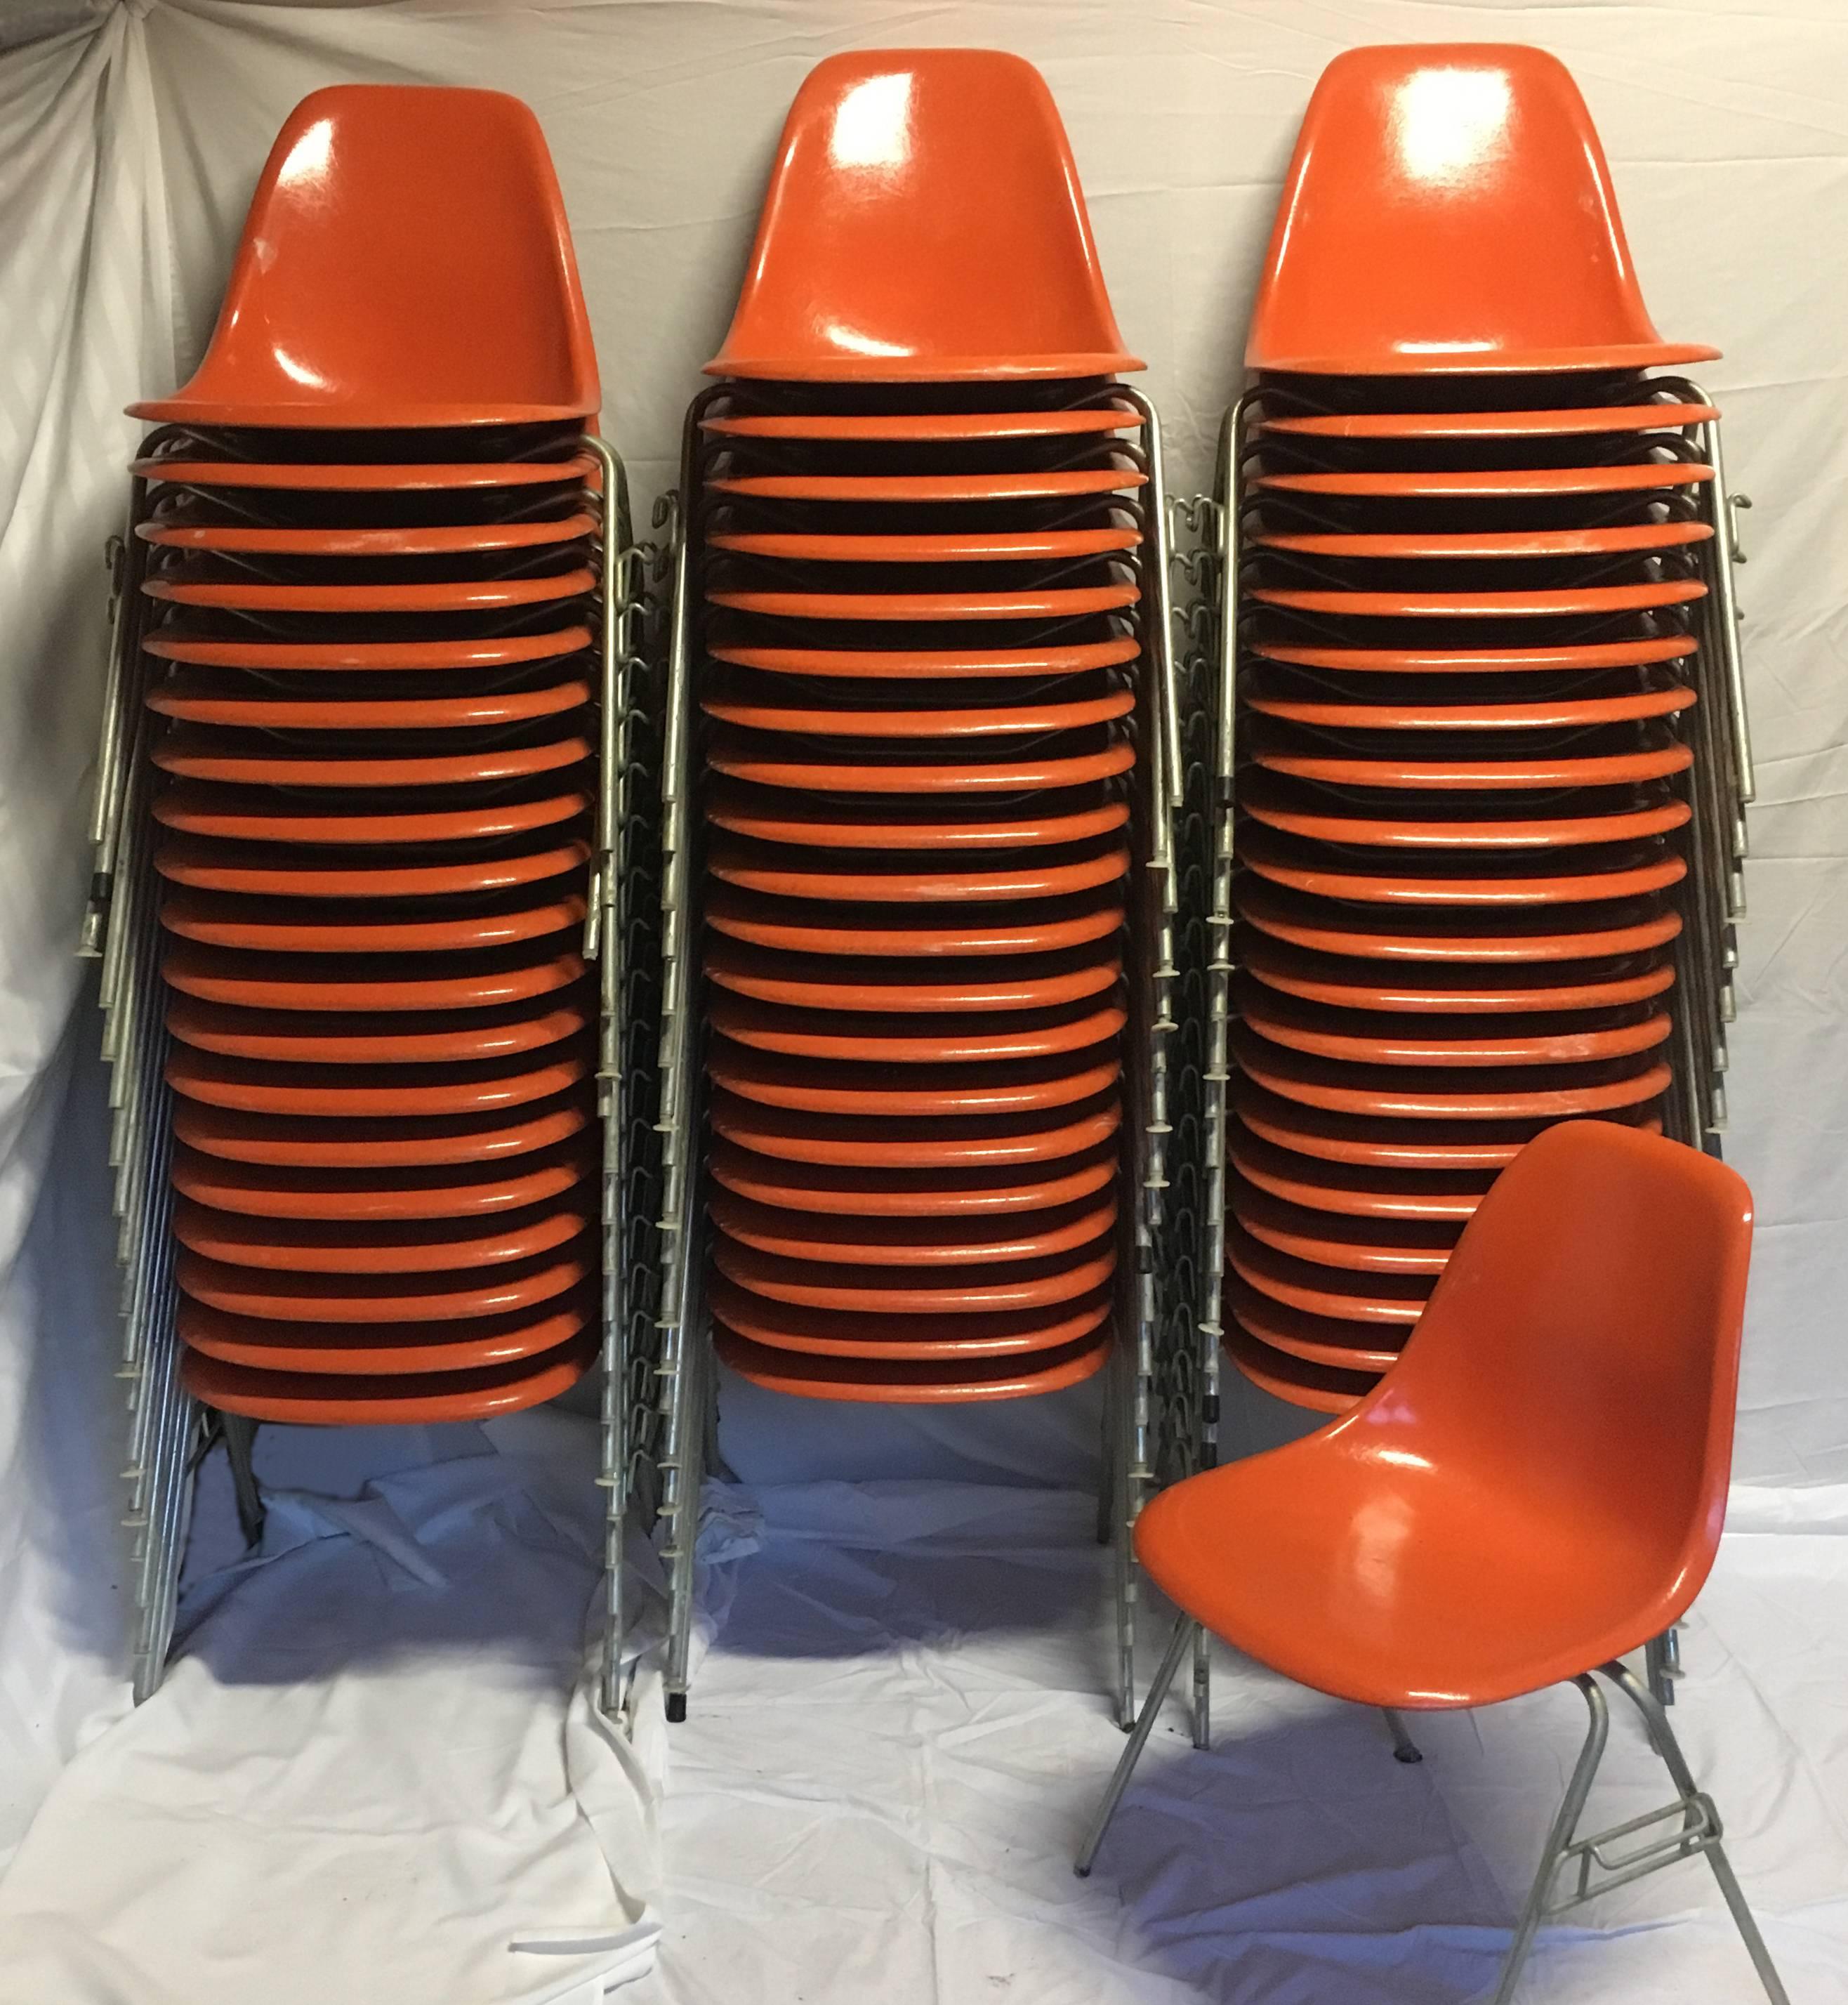 fiberglass chairs for sale